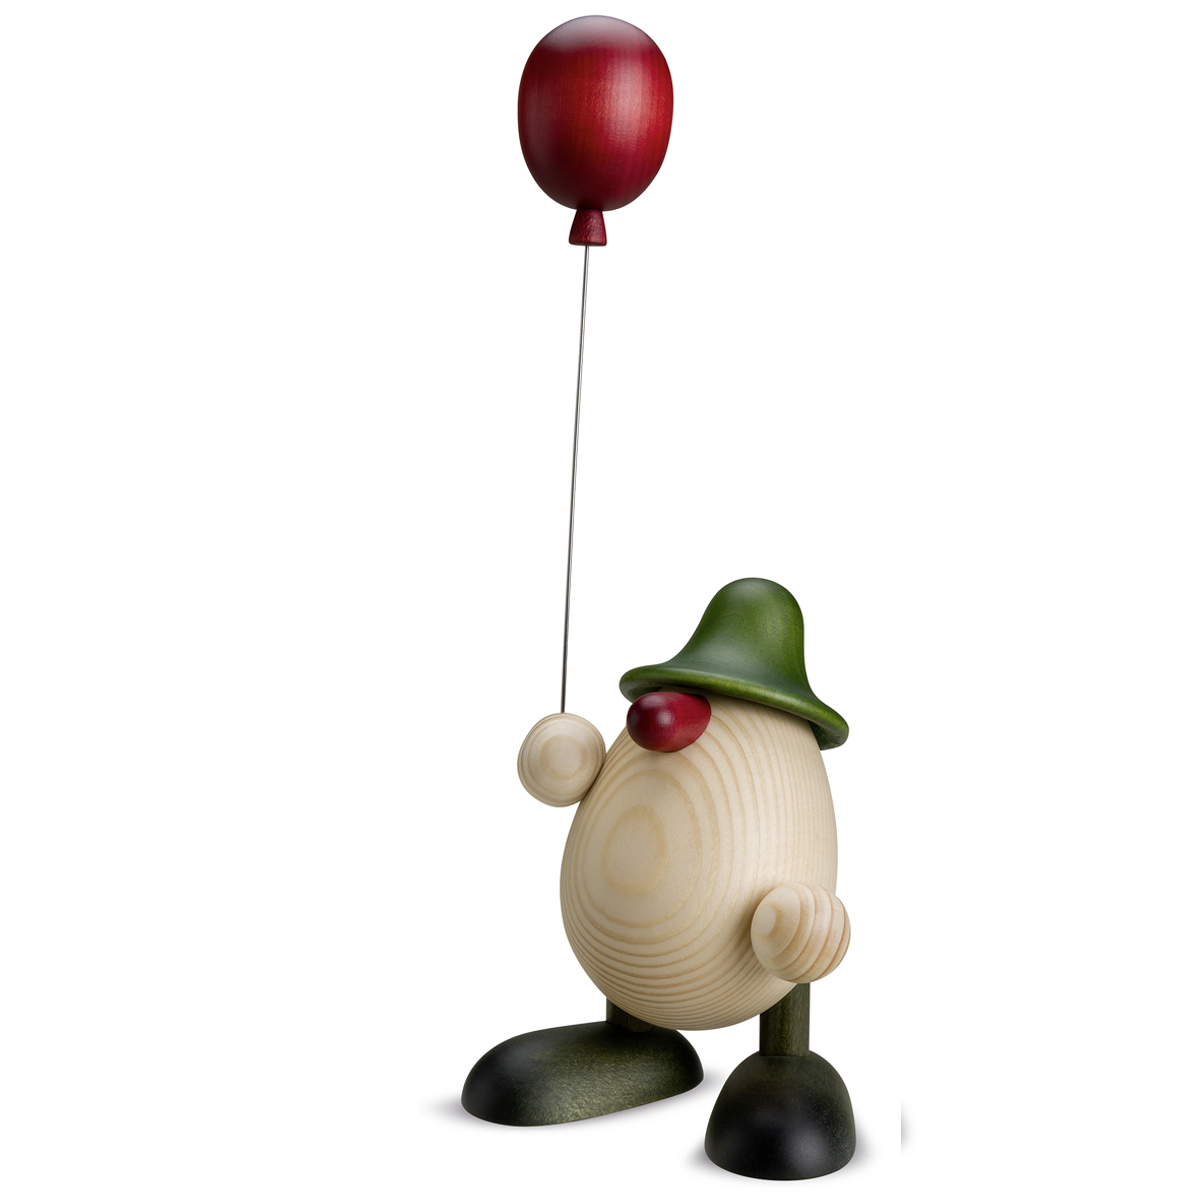 Egghead Otto with balloon, green